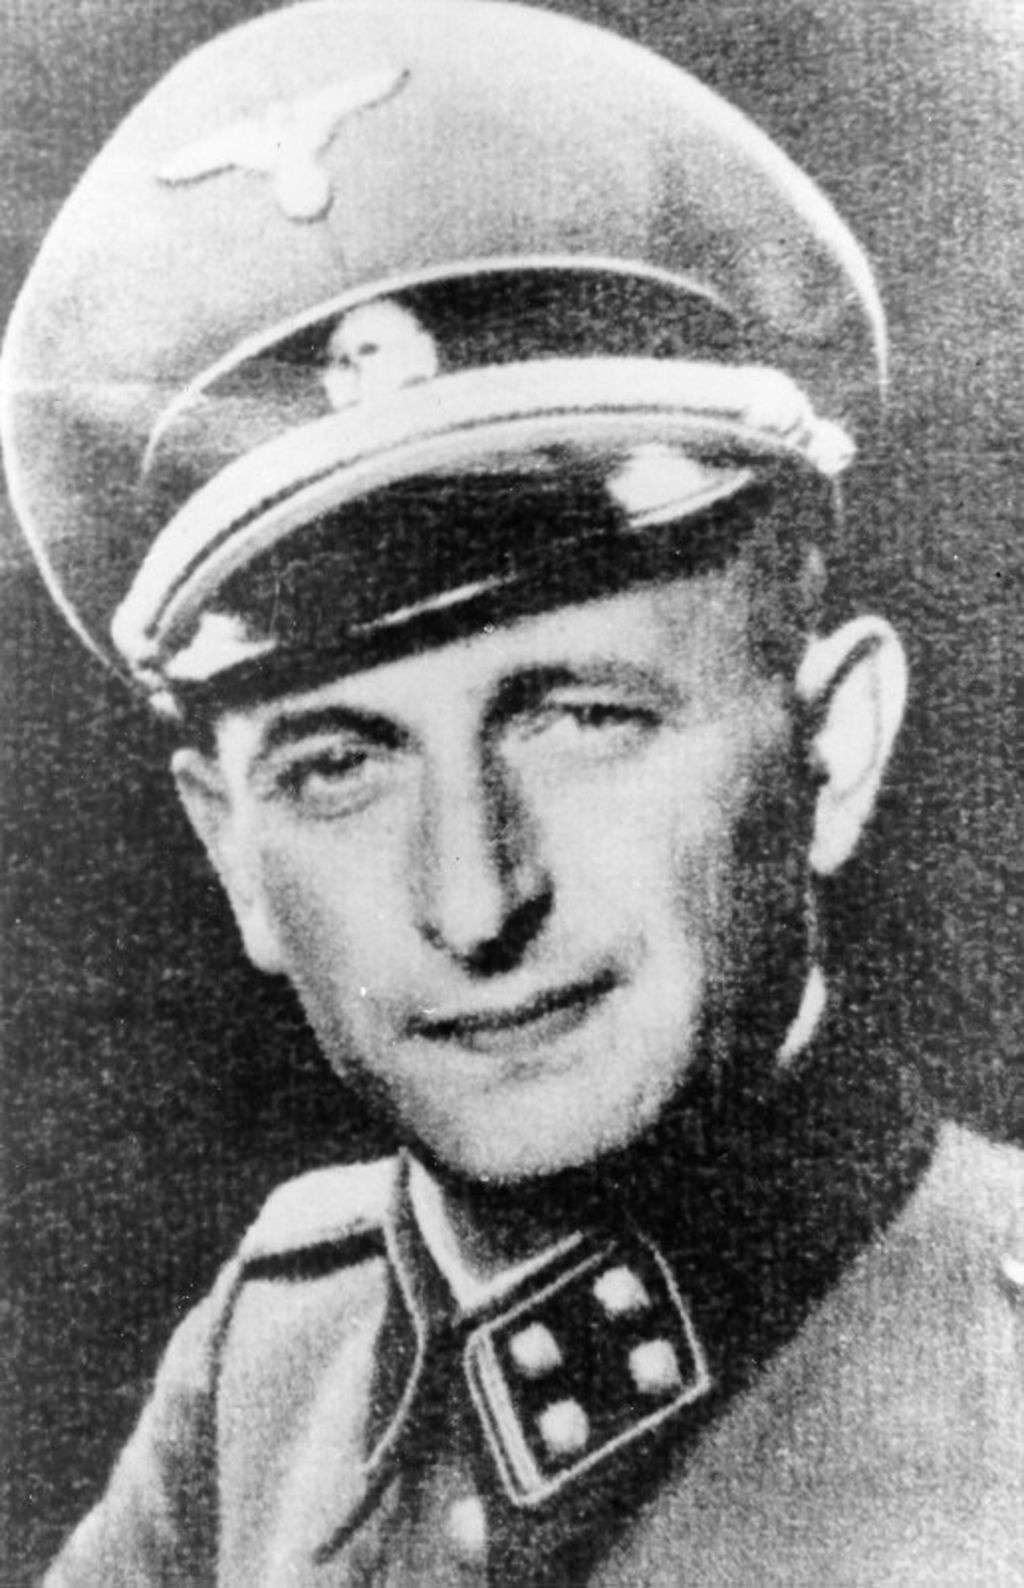 Exponat: Foto: Eichmann, Adolf, 1942